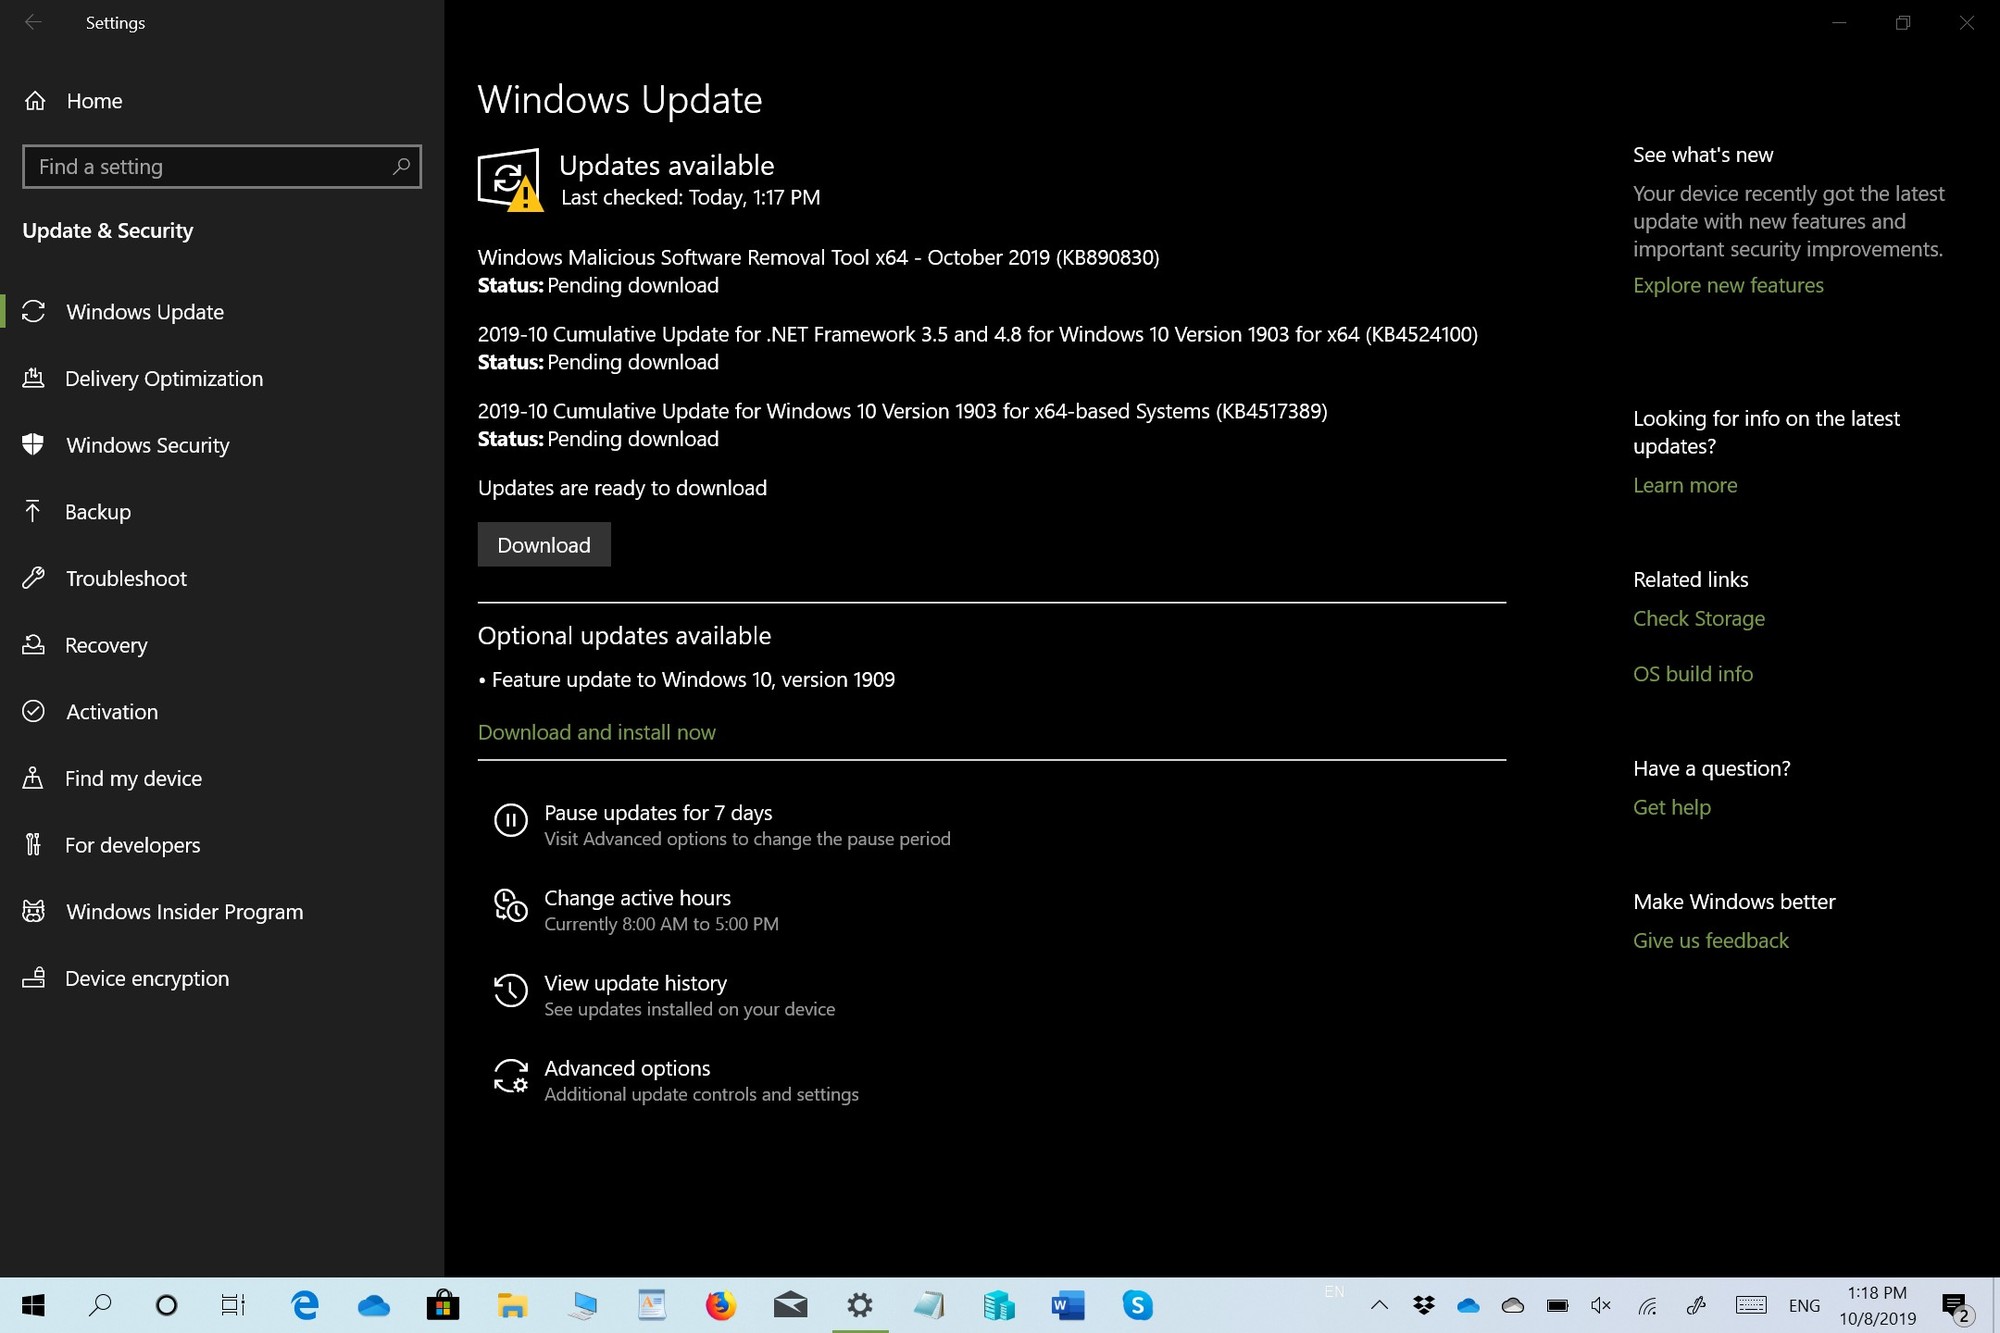 How to Install the Latest Windows 10 Feature Update Using Windows Update 26f90193-480d-47f5-8dda-a6584f047f30?upload=true.jpg